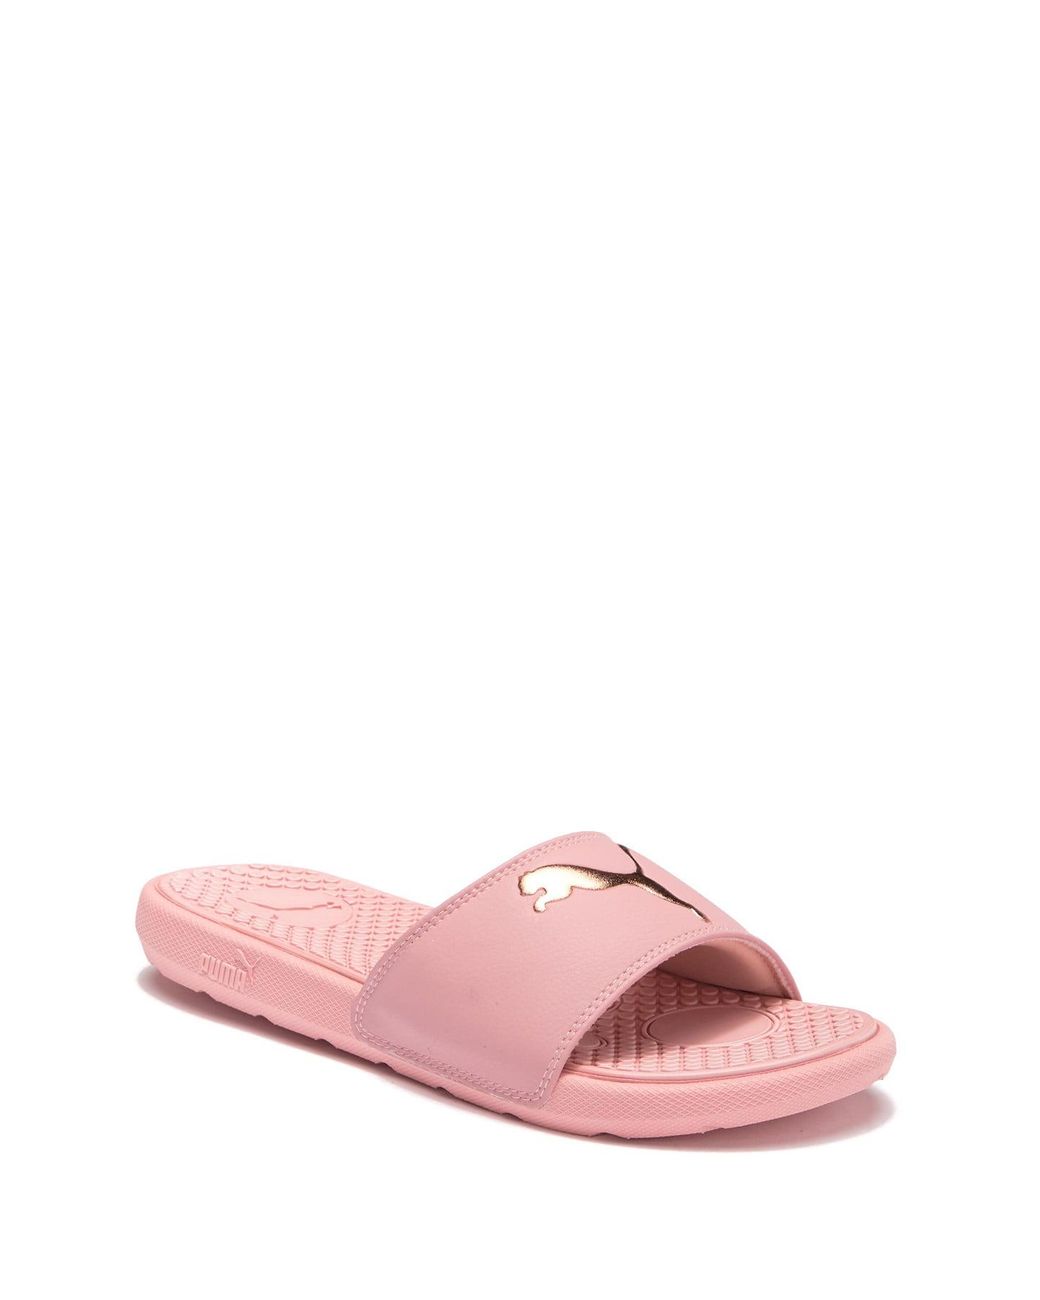 Pink Puma Sandals Discount | bellvalefarms.com